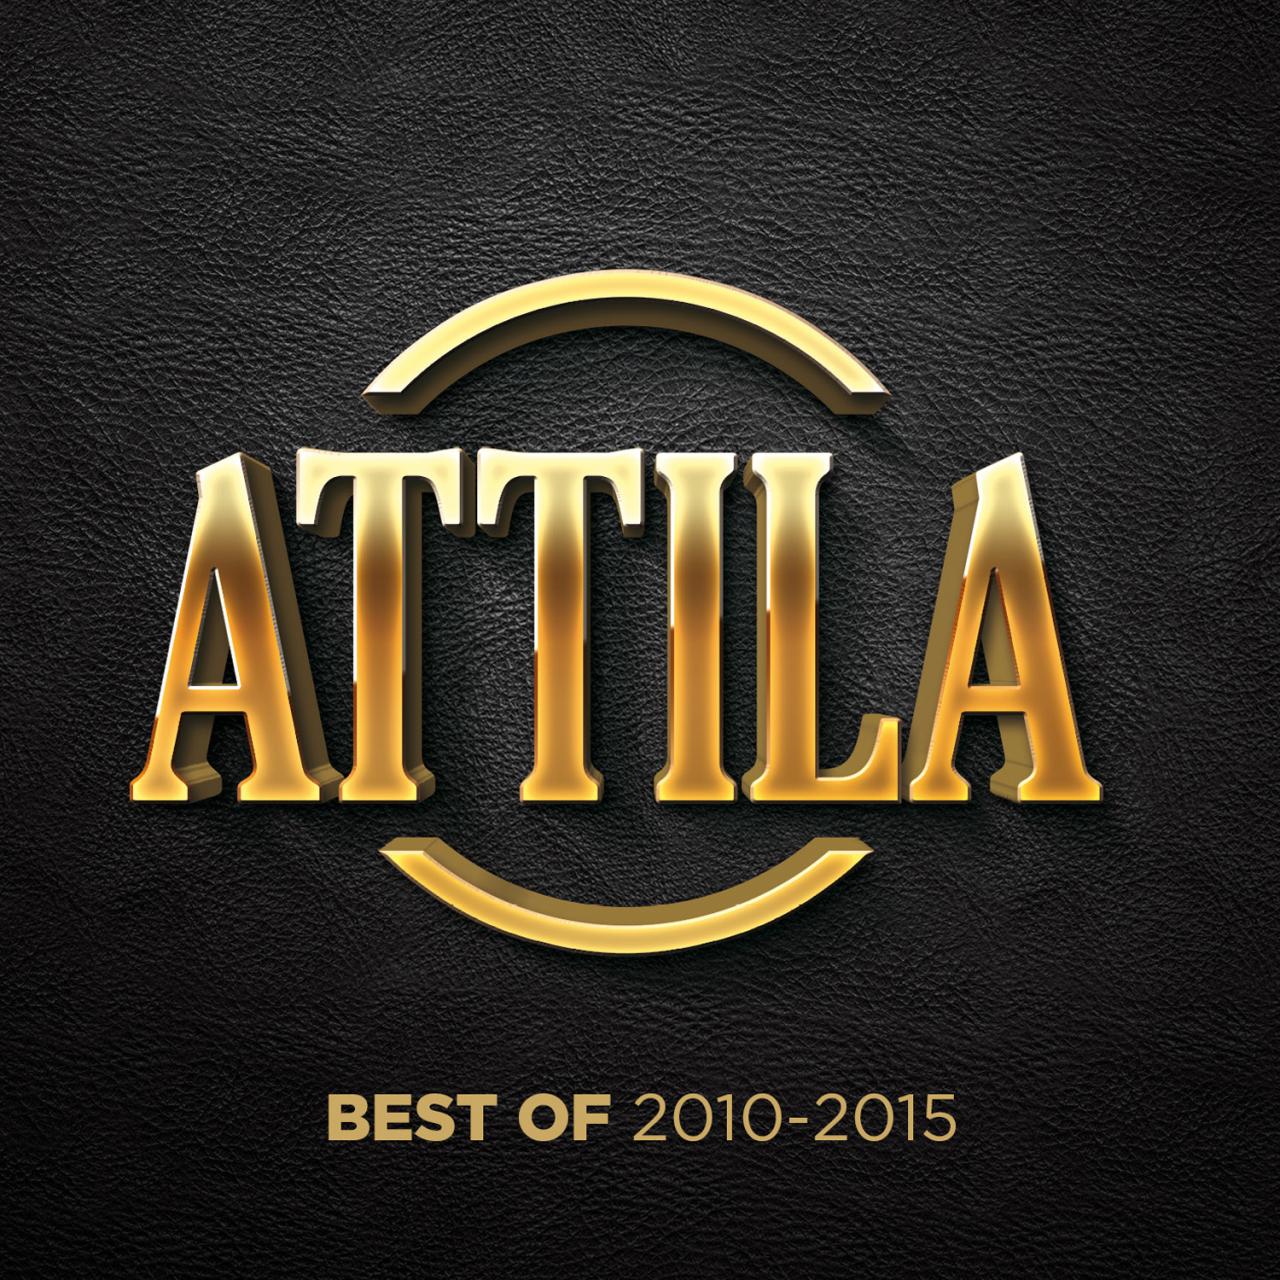 Attila Best of 2010-2015